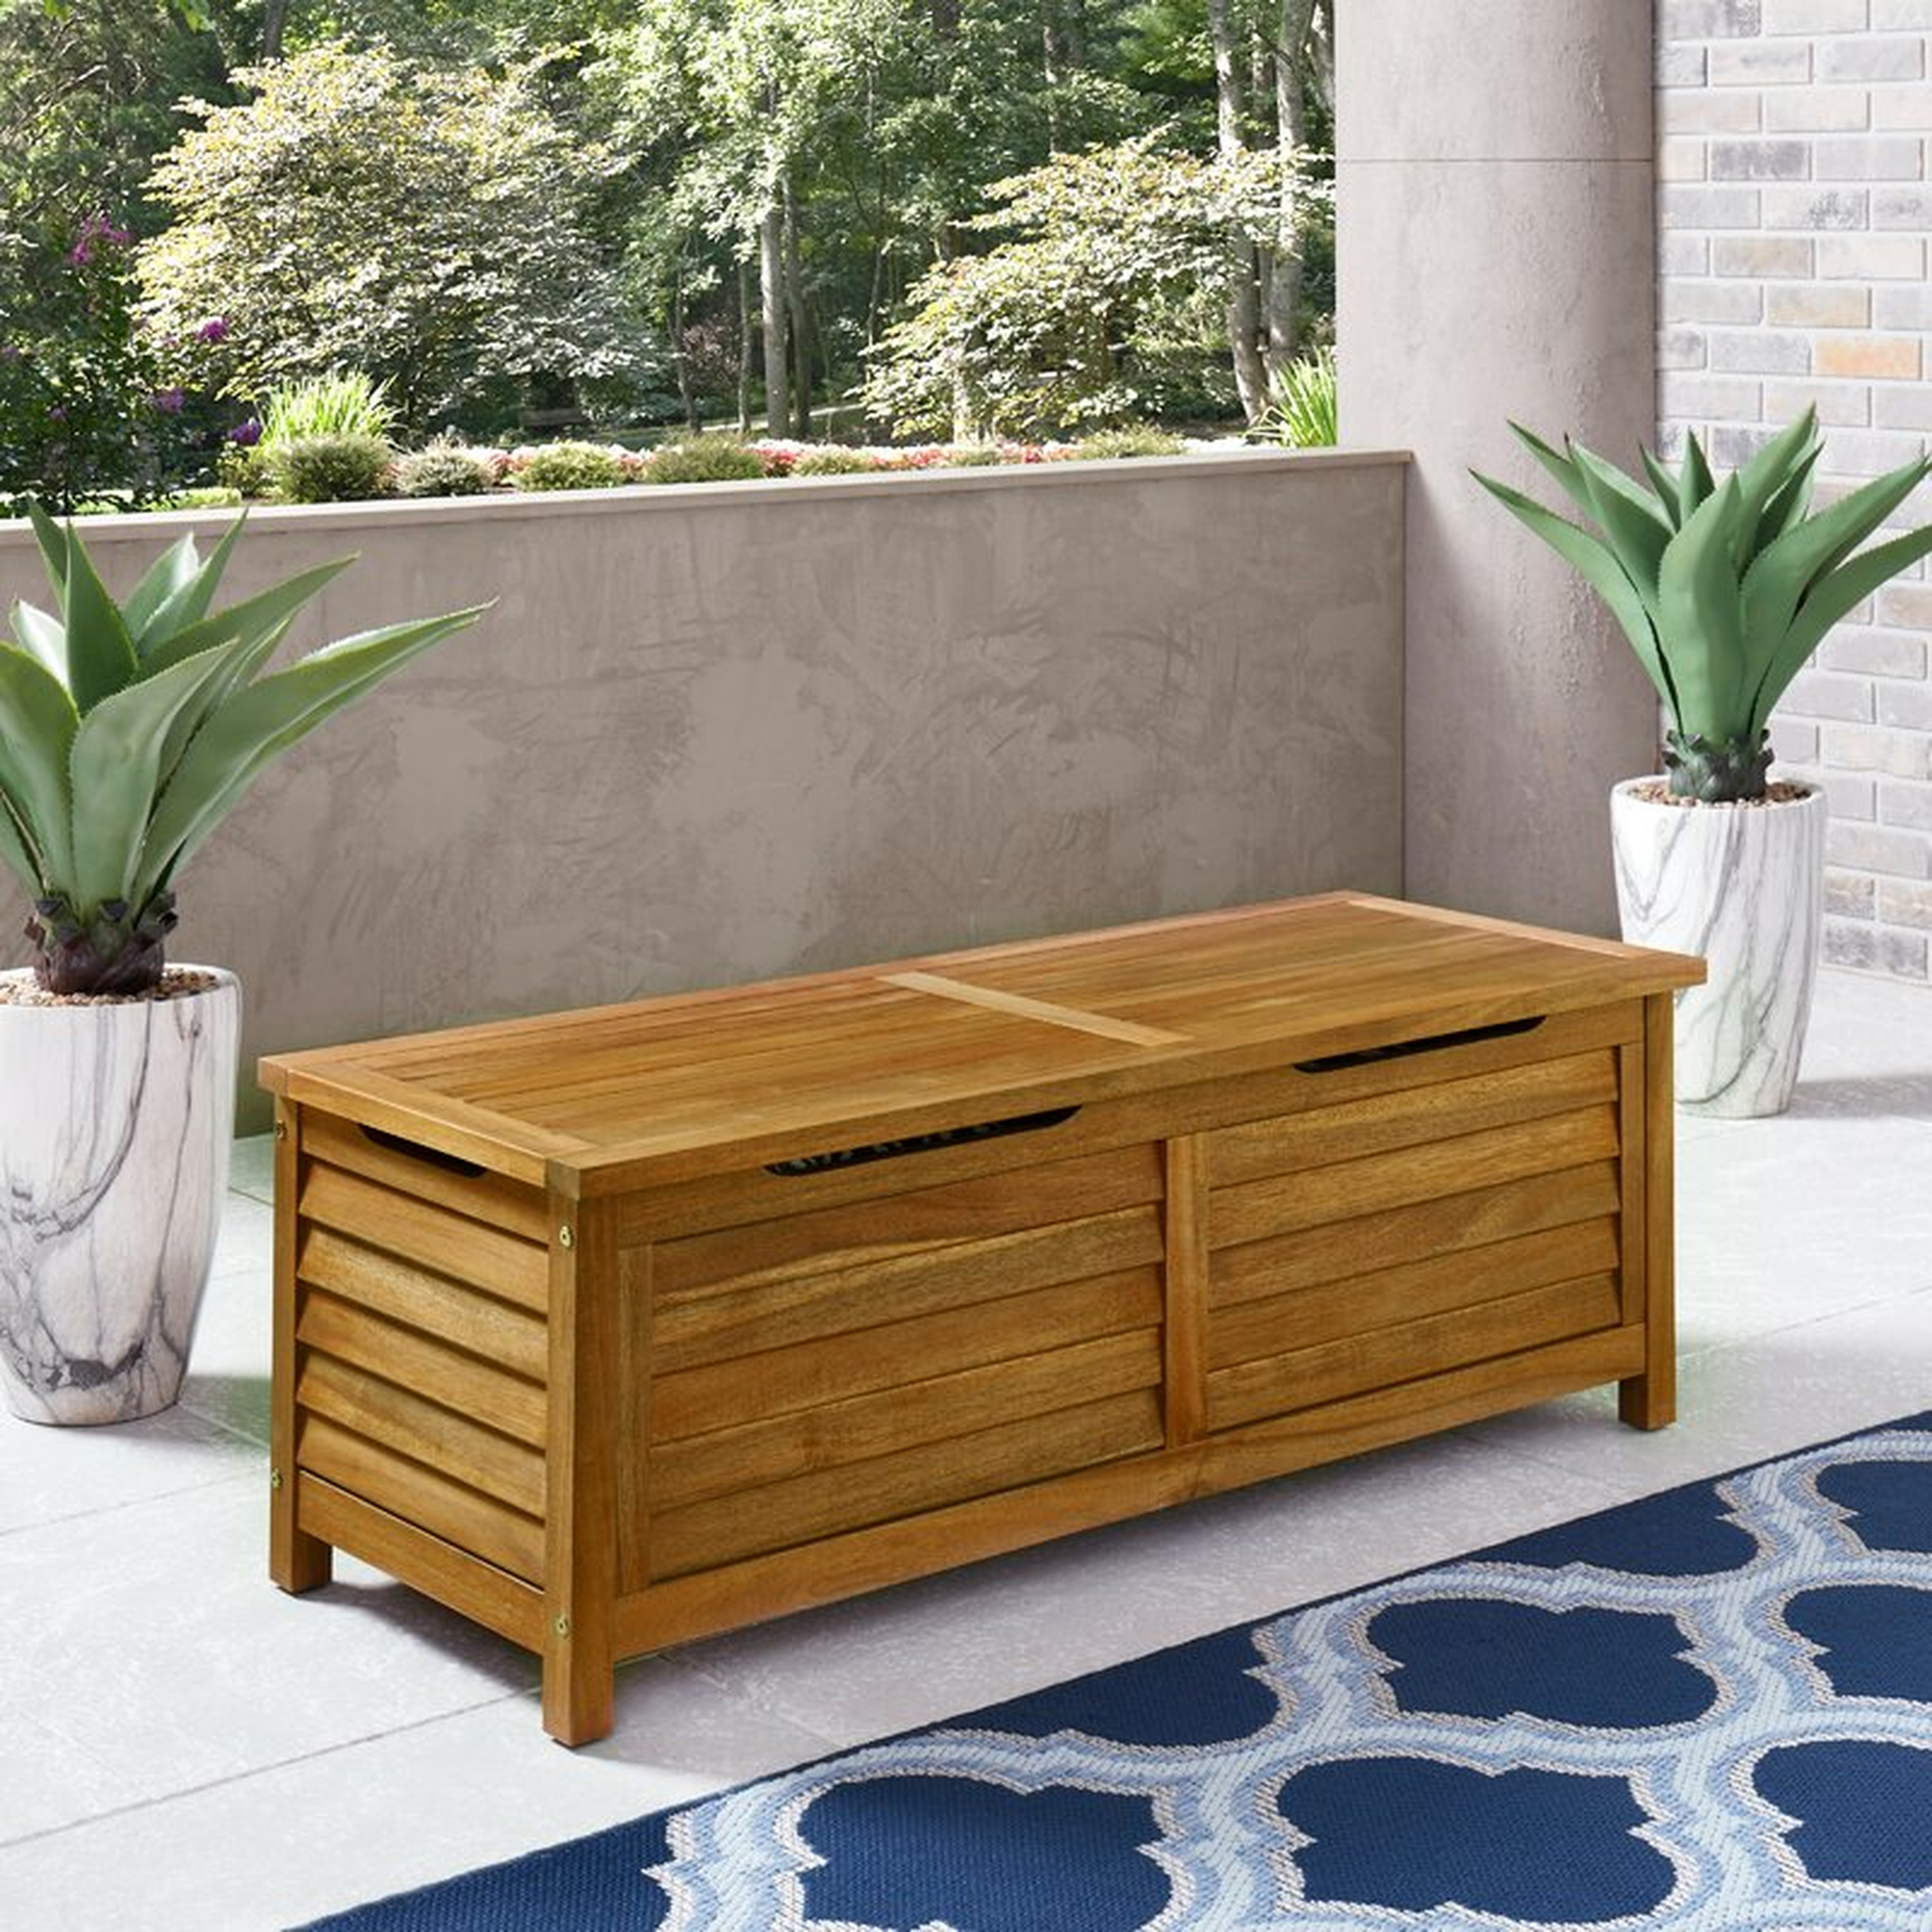 Wilczek 78.87 Gallons Solid Wood Deck Box - Wayfair